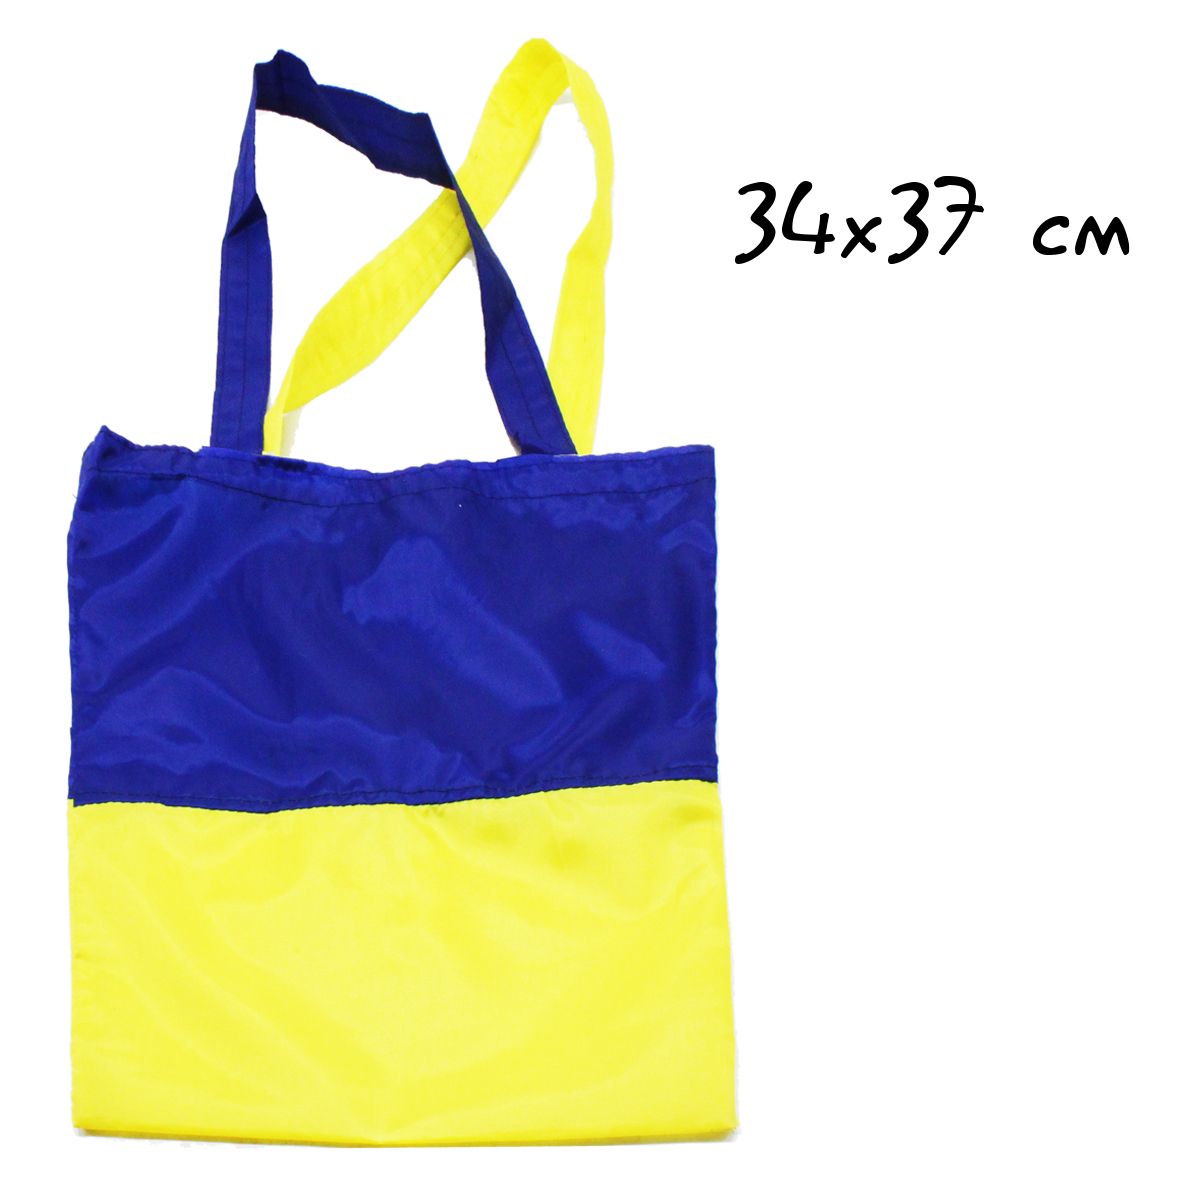 Эко-сумка Украина, 34х37 см